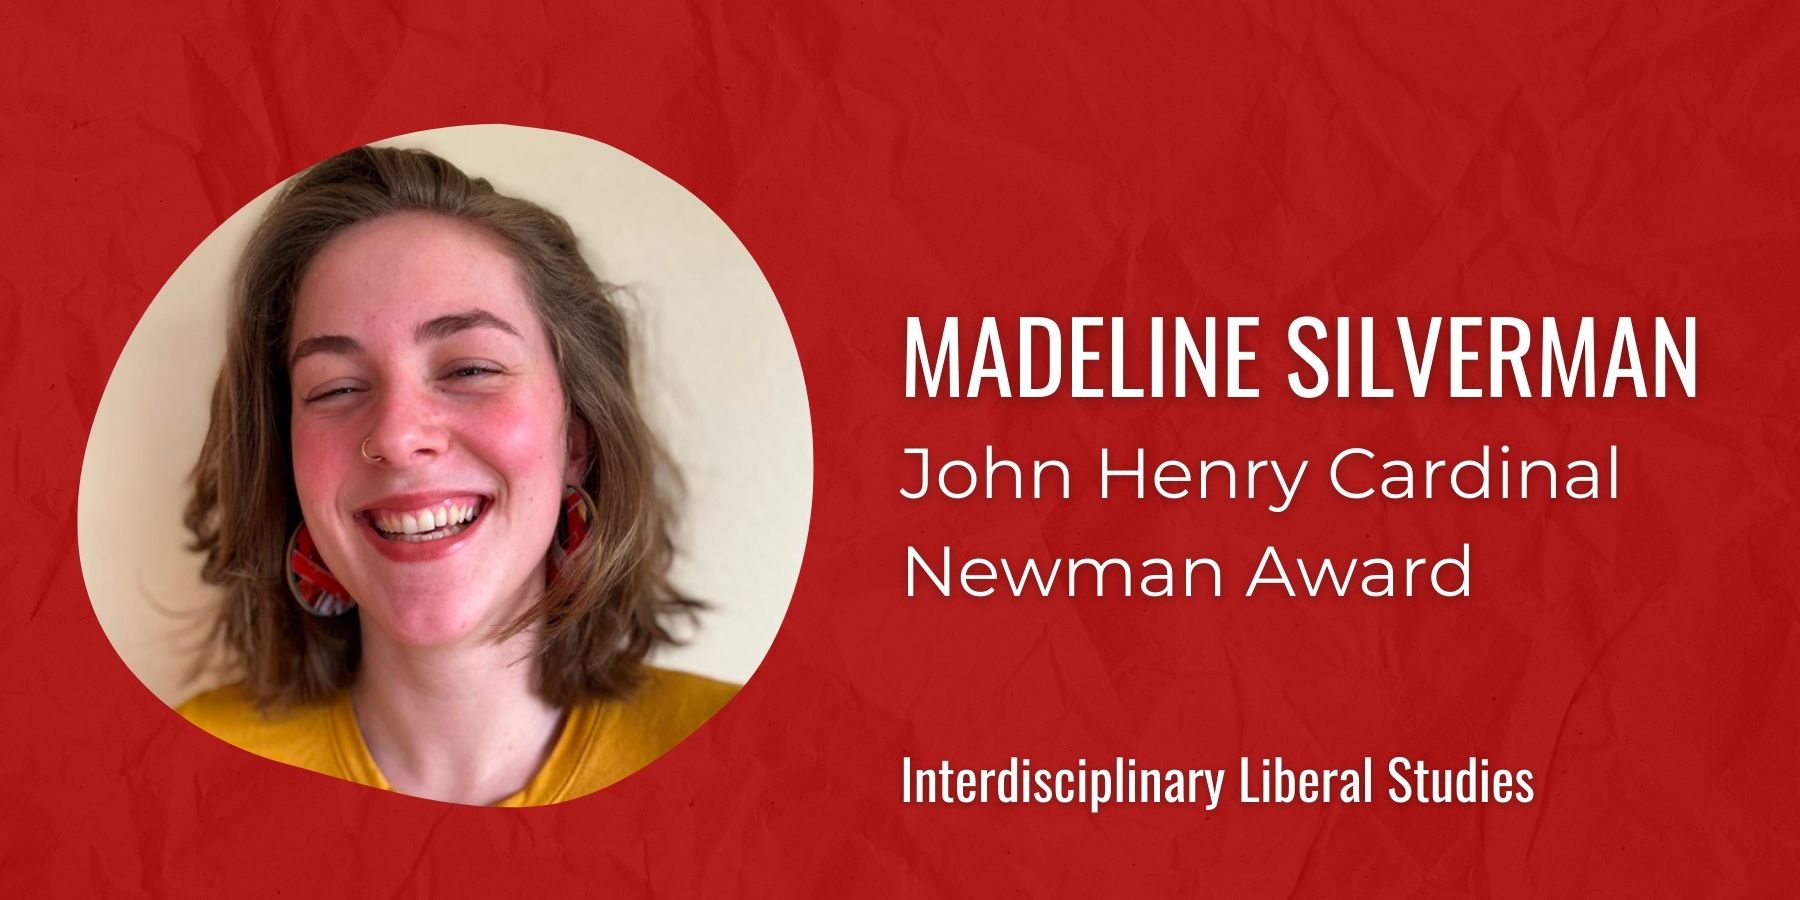 Image: Madeline Silverman Text: John Henry Cardinal Newman Award, Interdisciplinary Liberal Studies